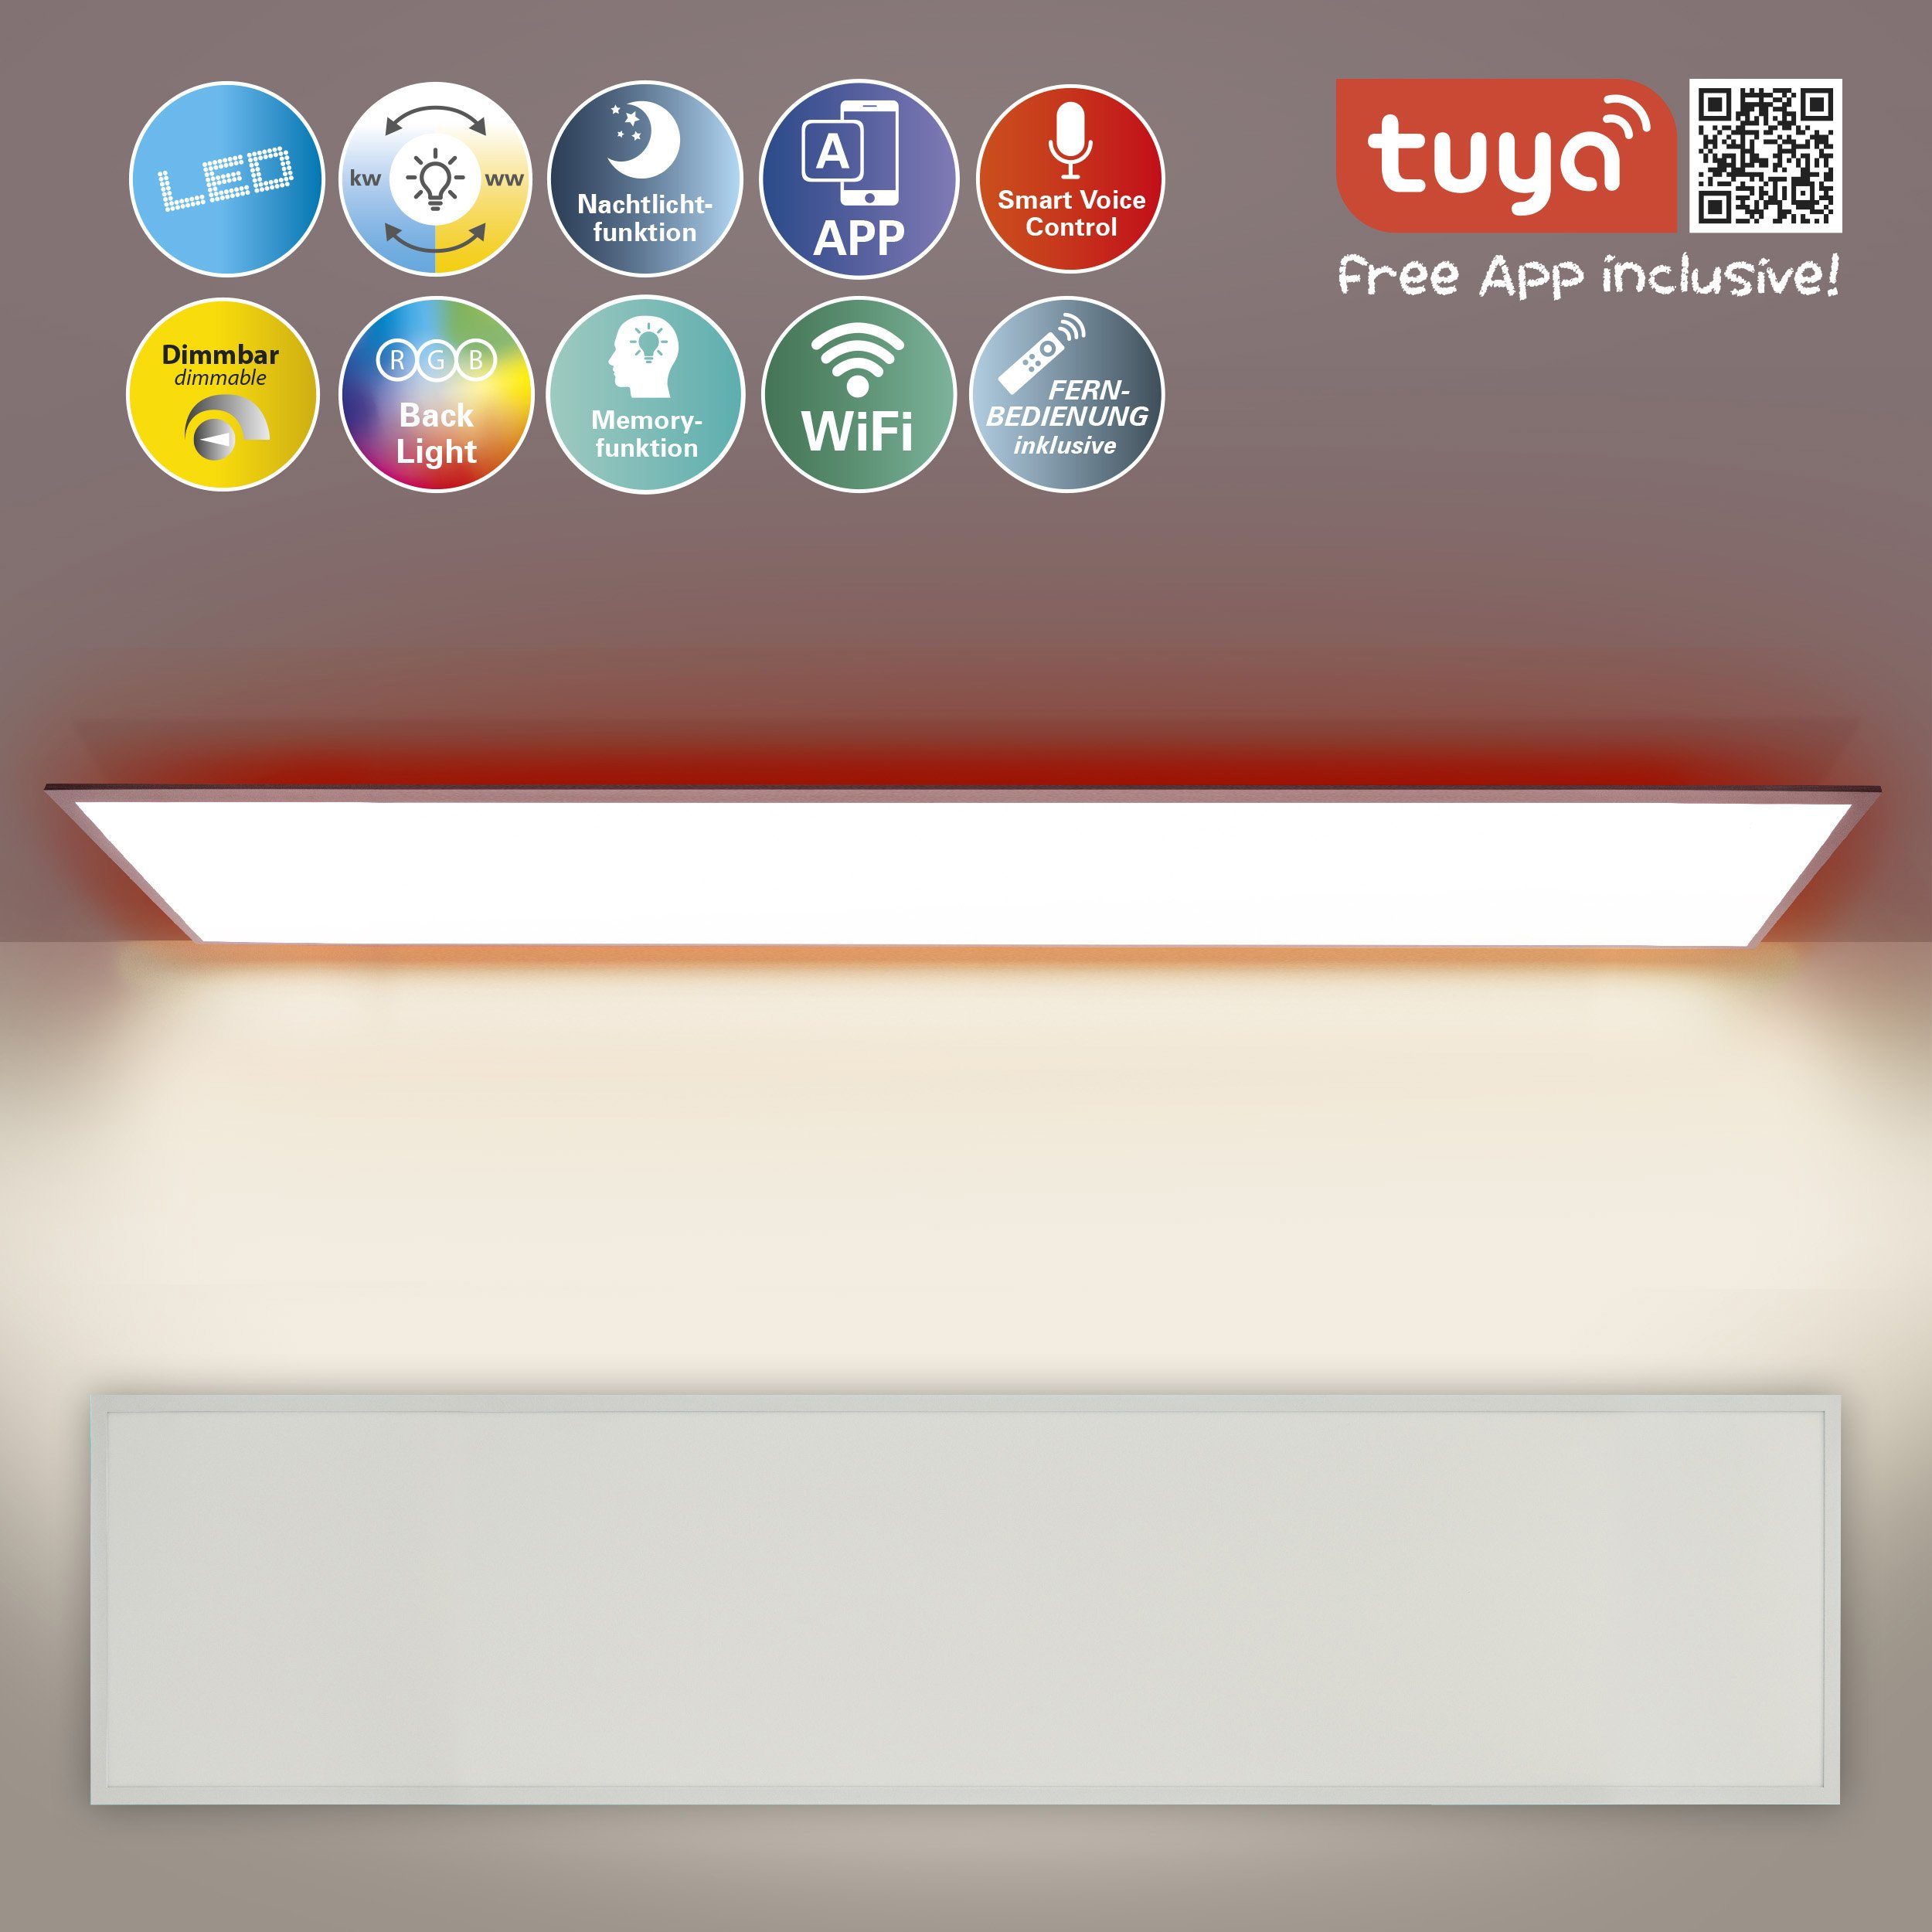 näve Smarte LED-Leuchte Hintergrund: LED Smart Farbwechsler, Memoryfunktion, LED fest Home App; Panel, CCT; Fernb., Nachtlicht-/Memoryfunktion; integriert, Backlight RGB-Stripe; Nachtlichtfunktion